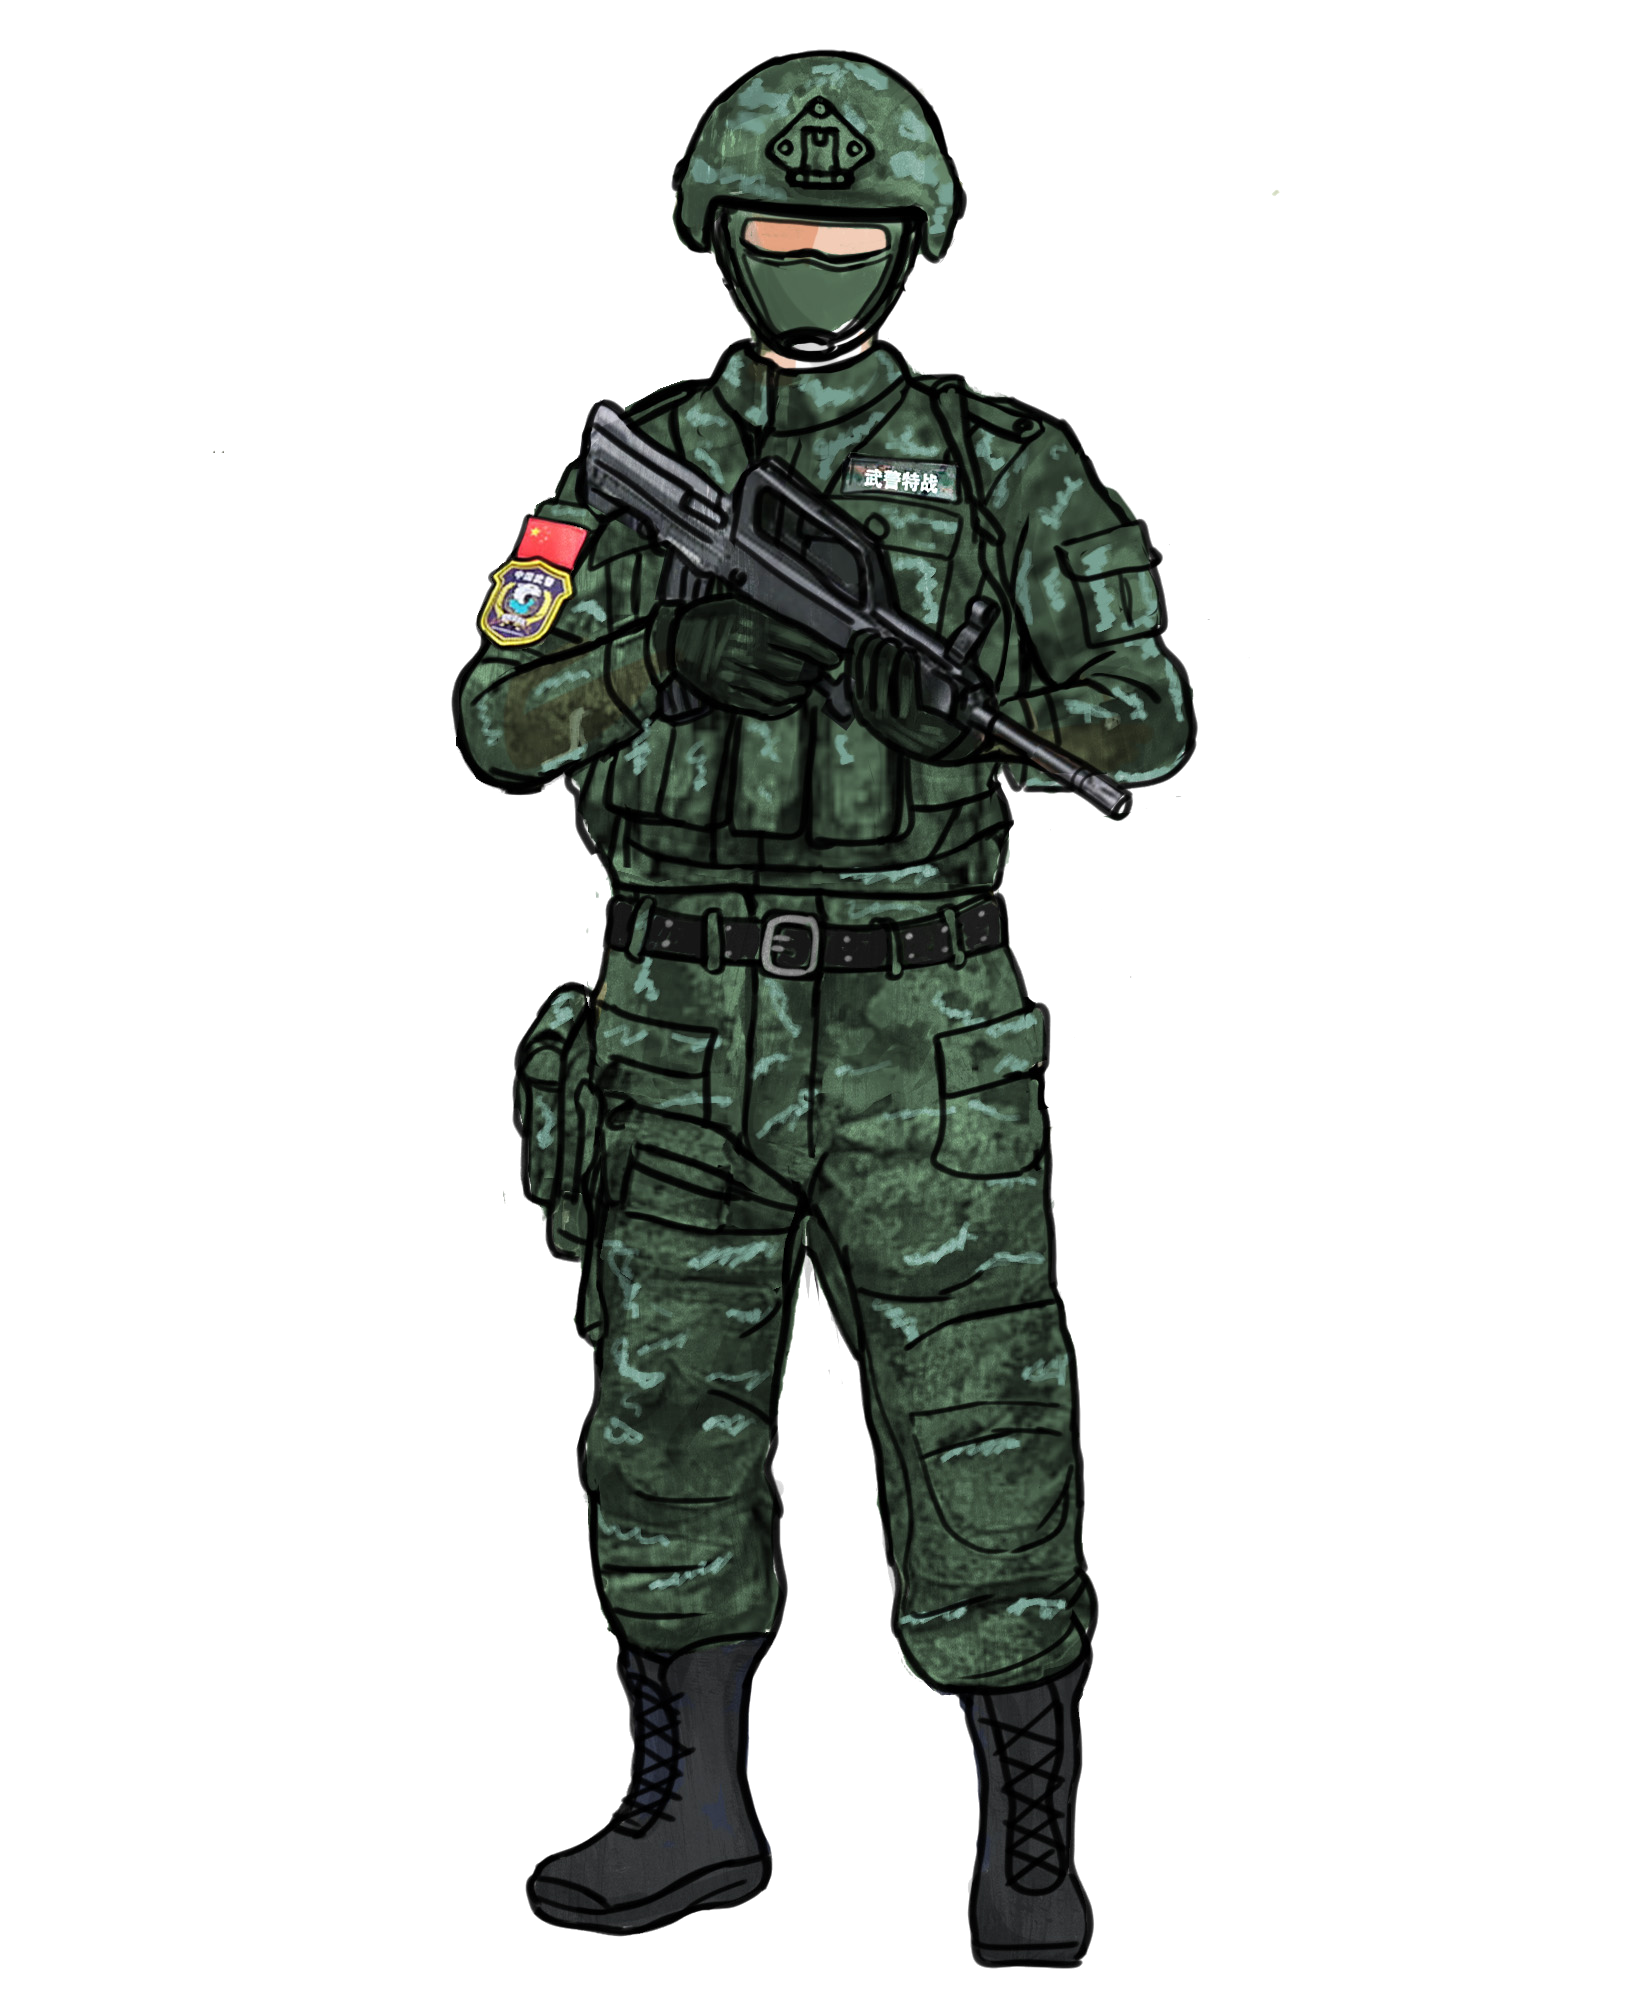 PAP in combat uniform